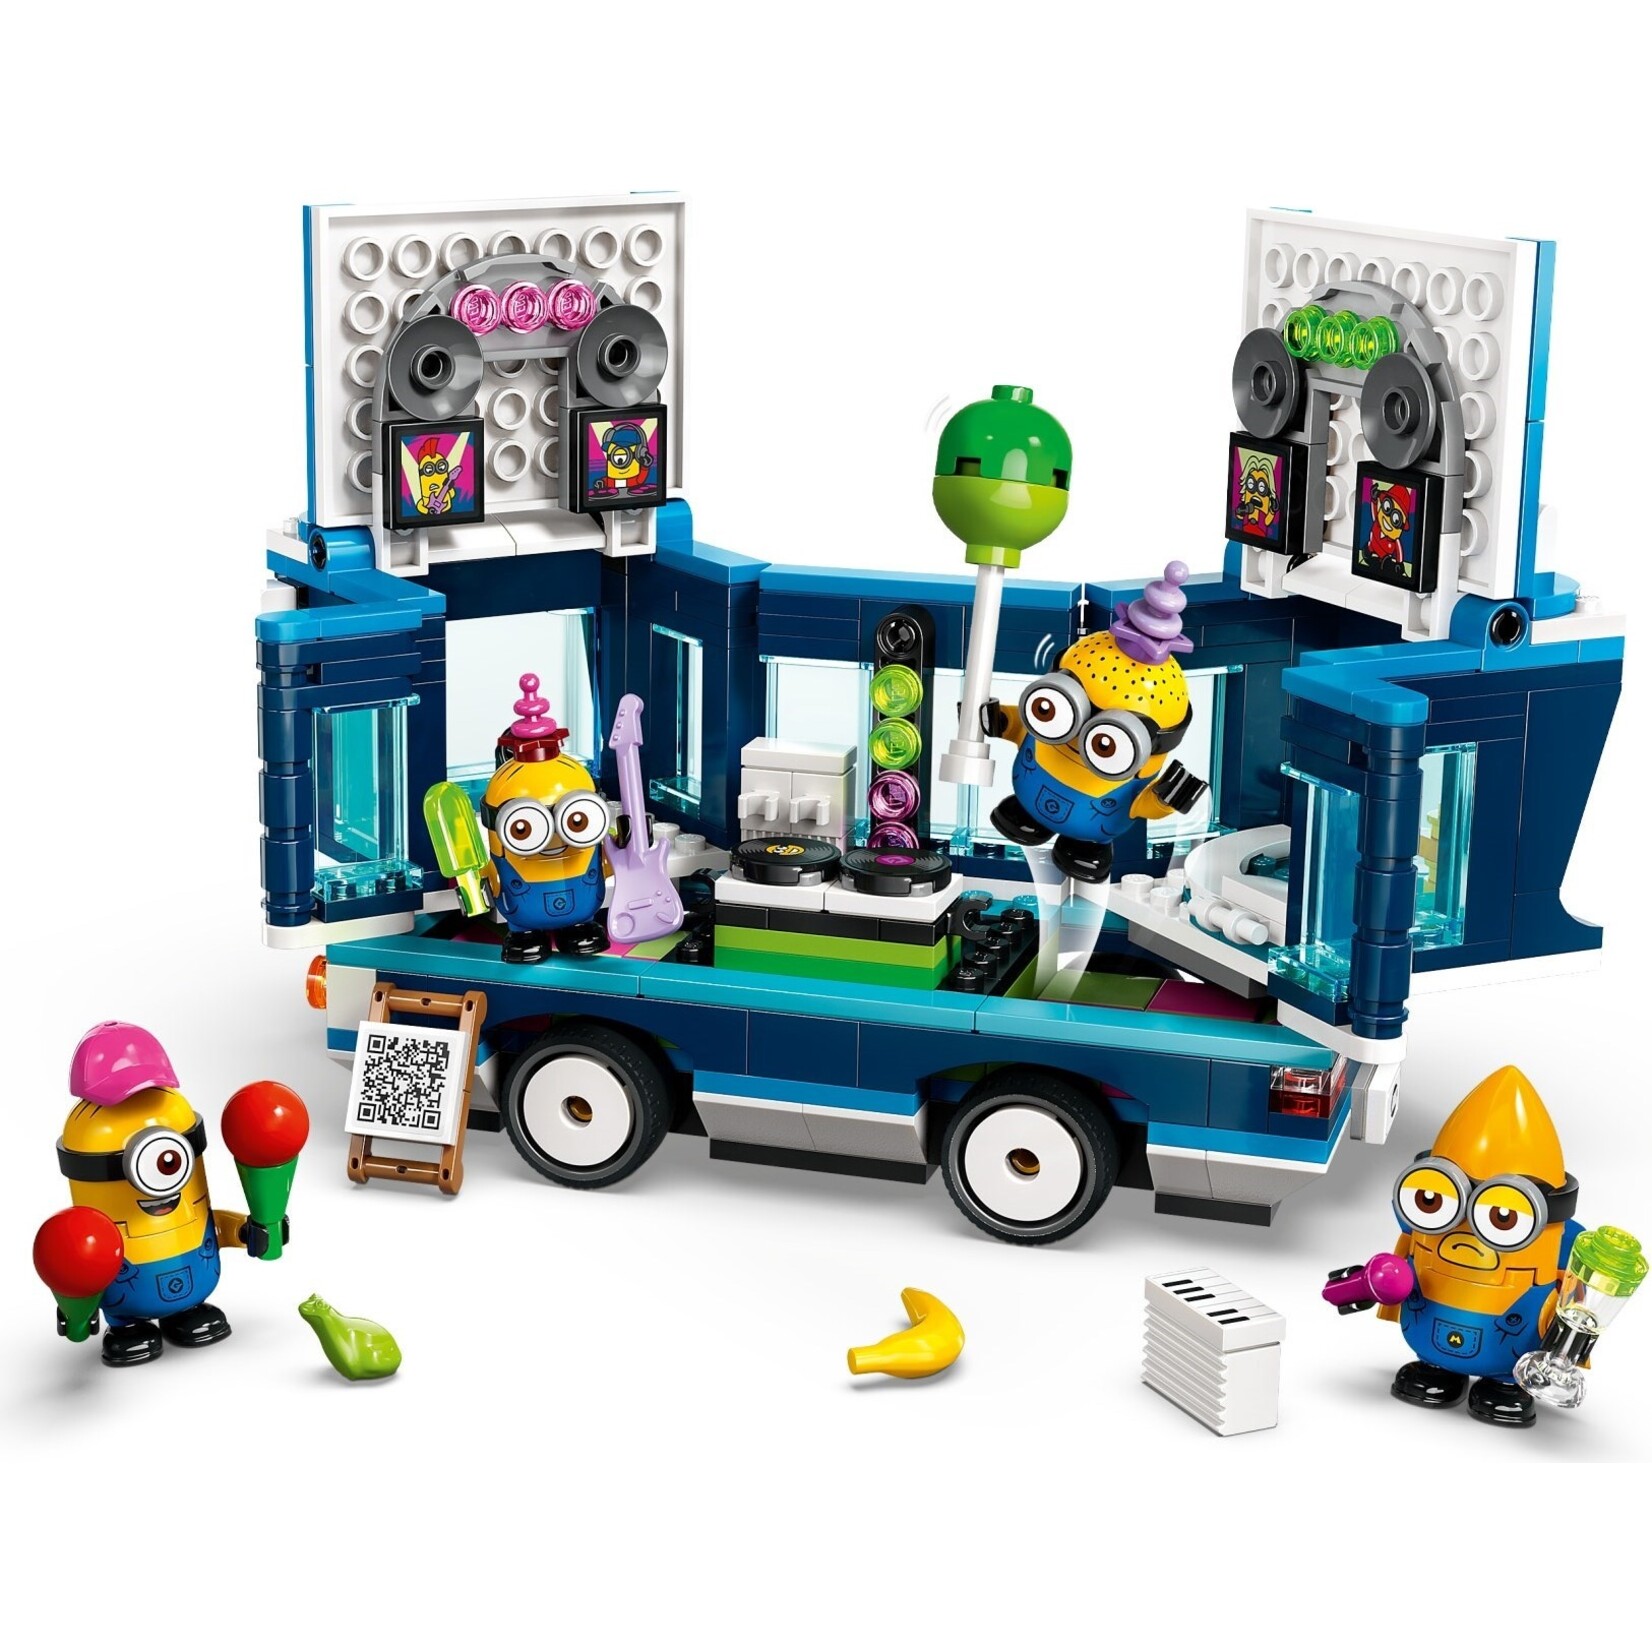 LEGO Muzikale feestbus van de Minions - 75581